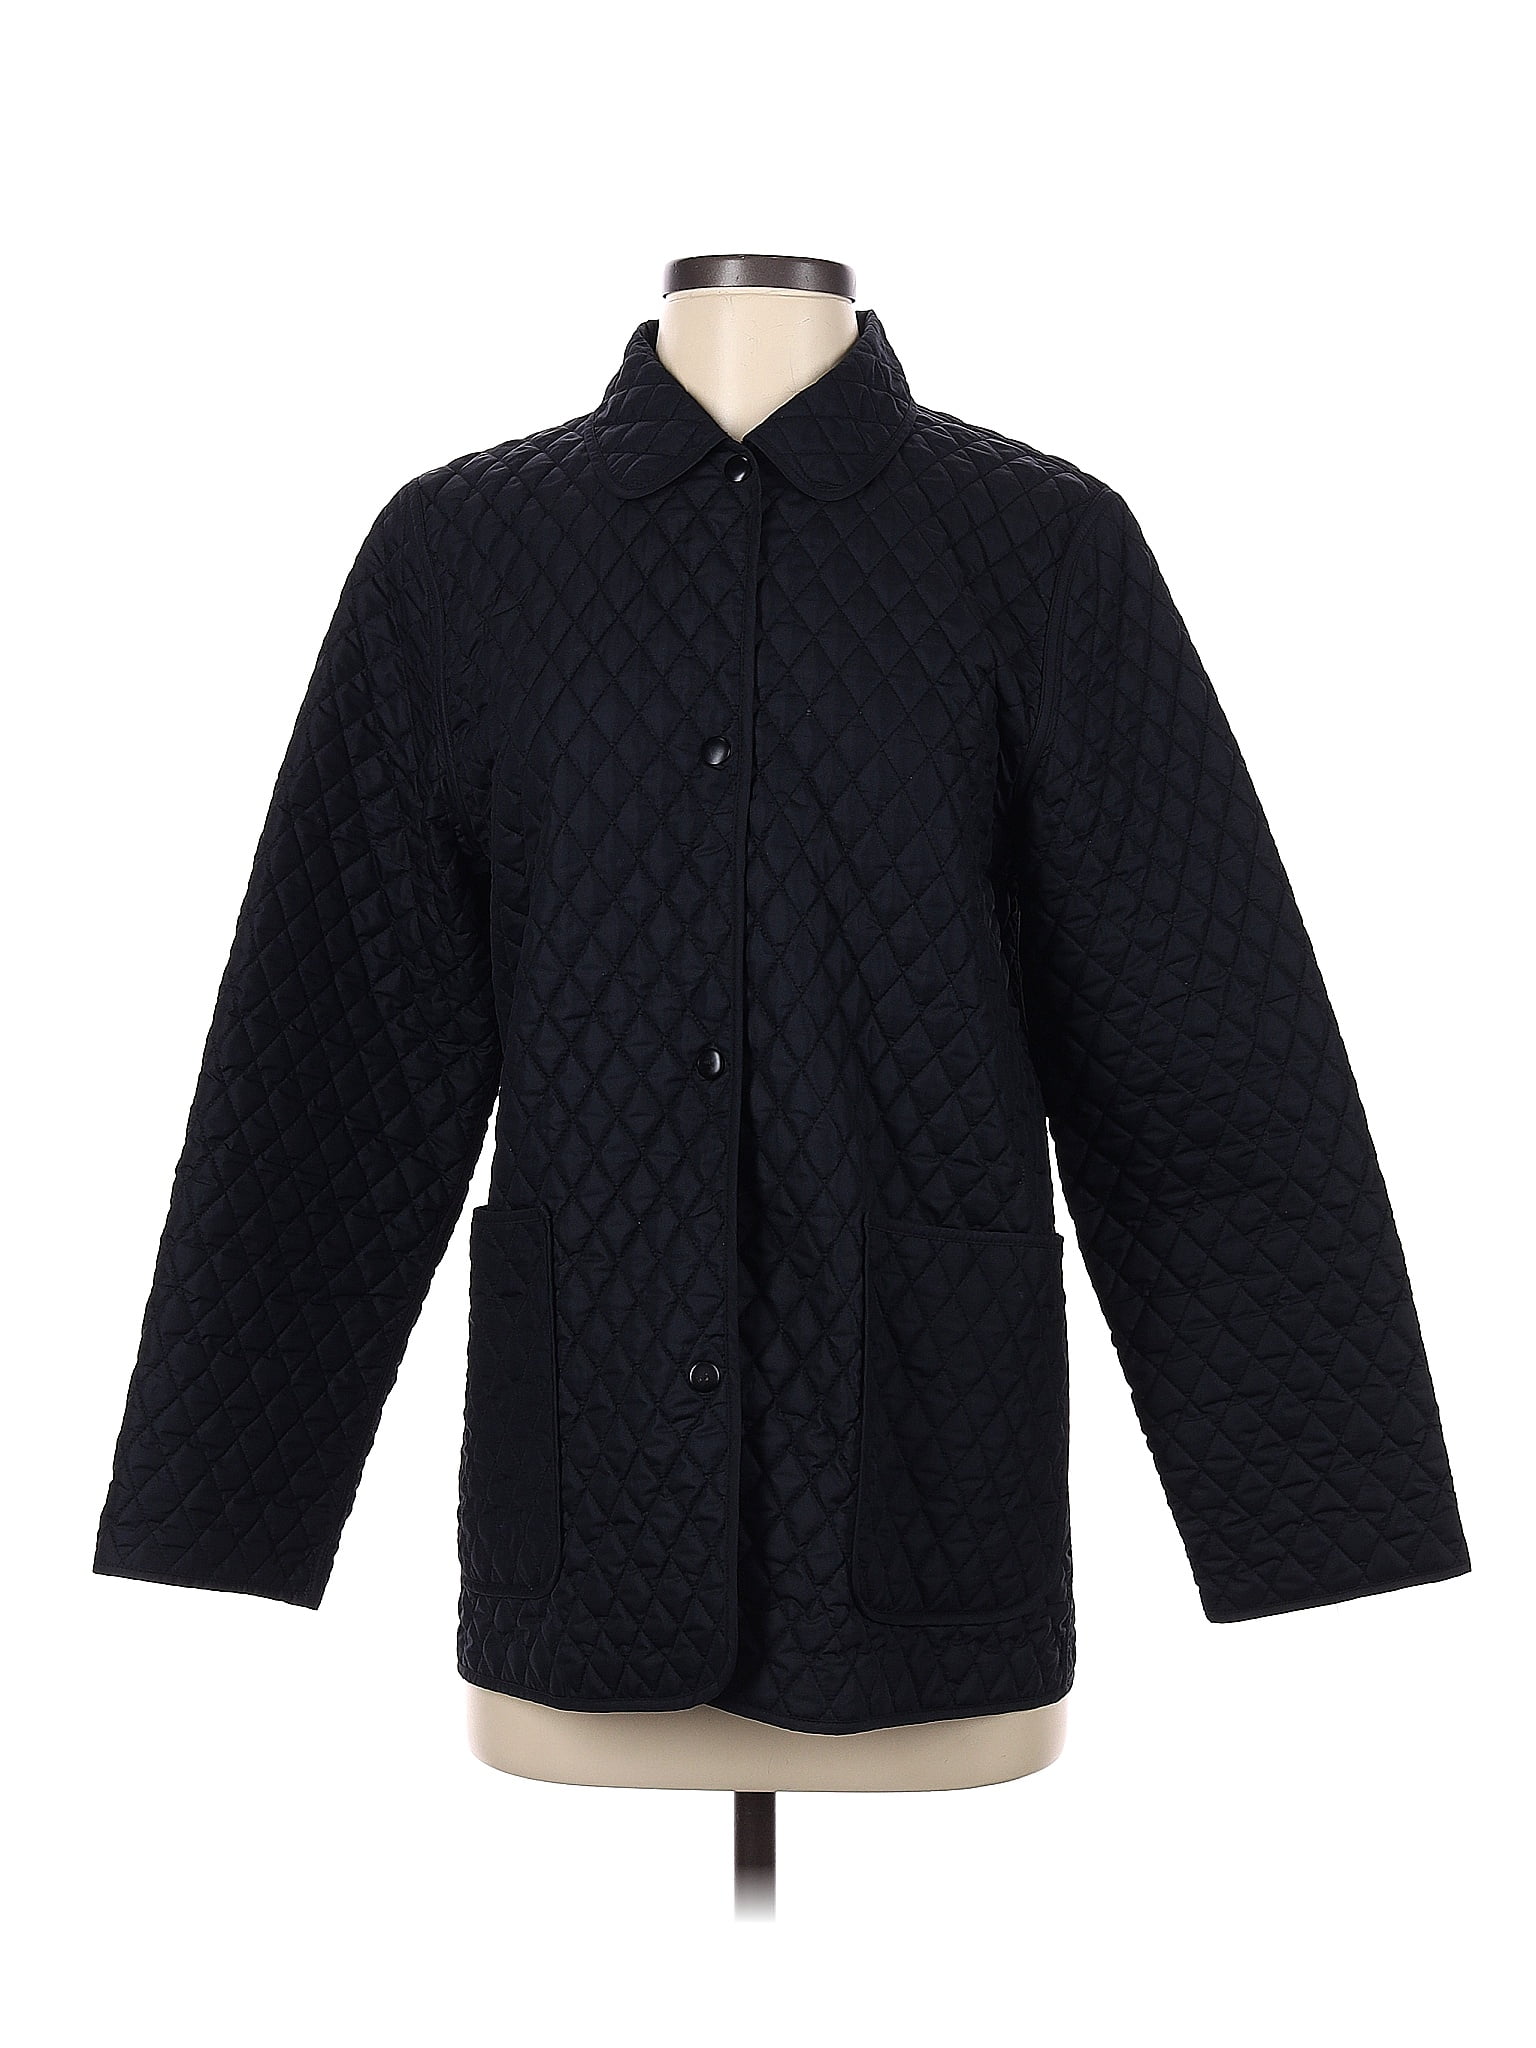 Mulberry Street Coats Jackets Hot Sale | website.jkuat.ac.ke